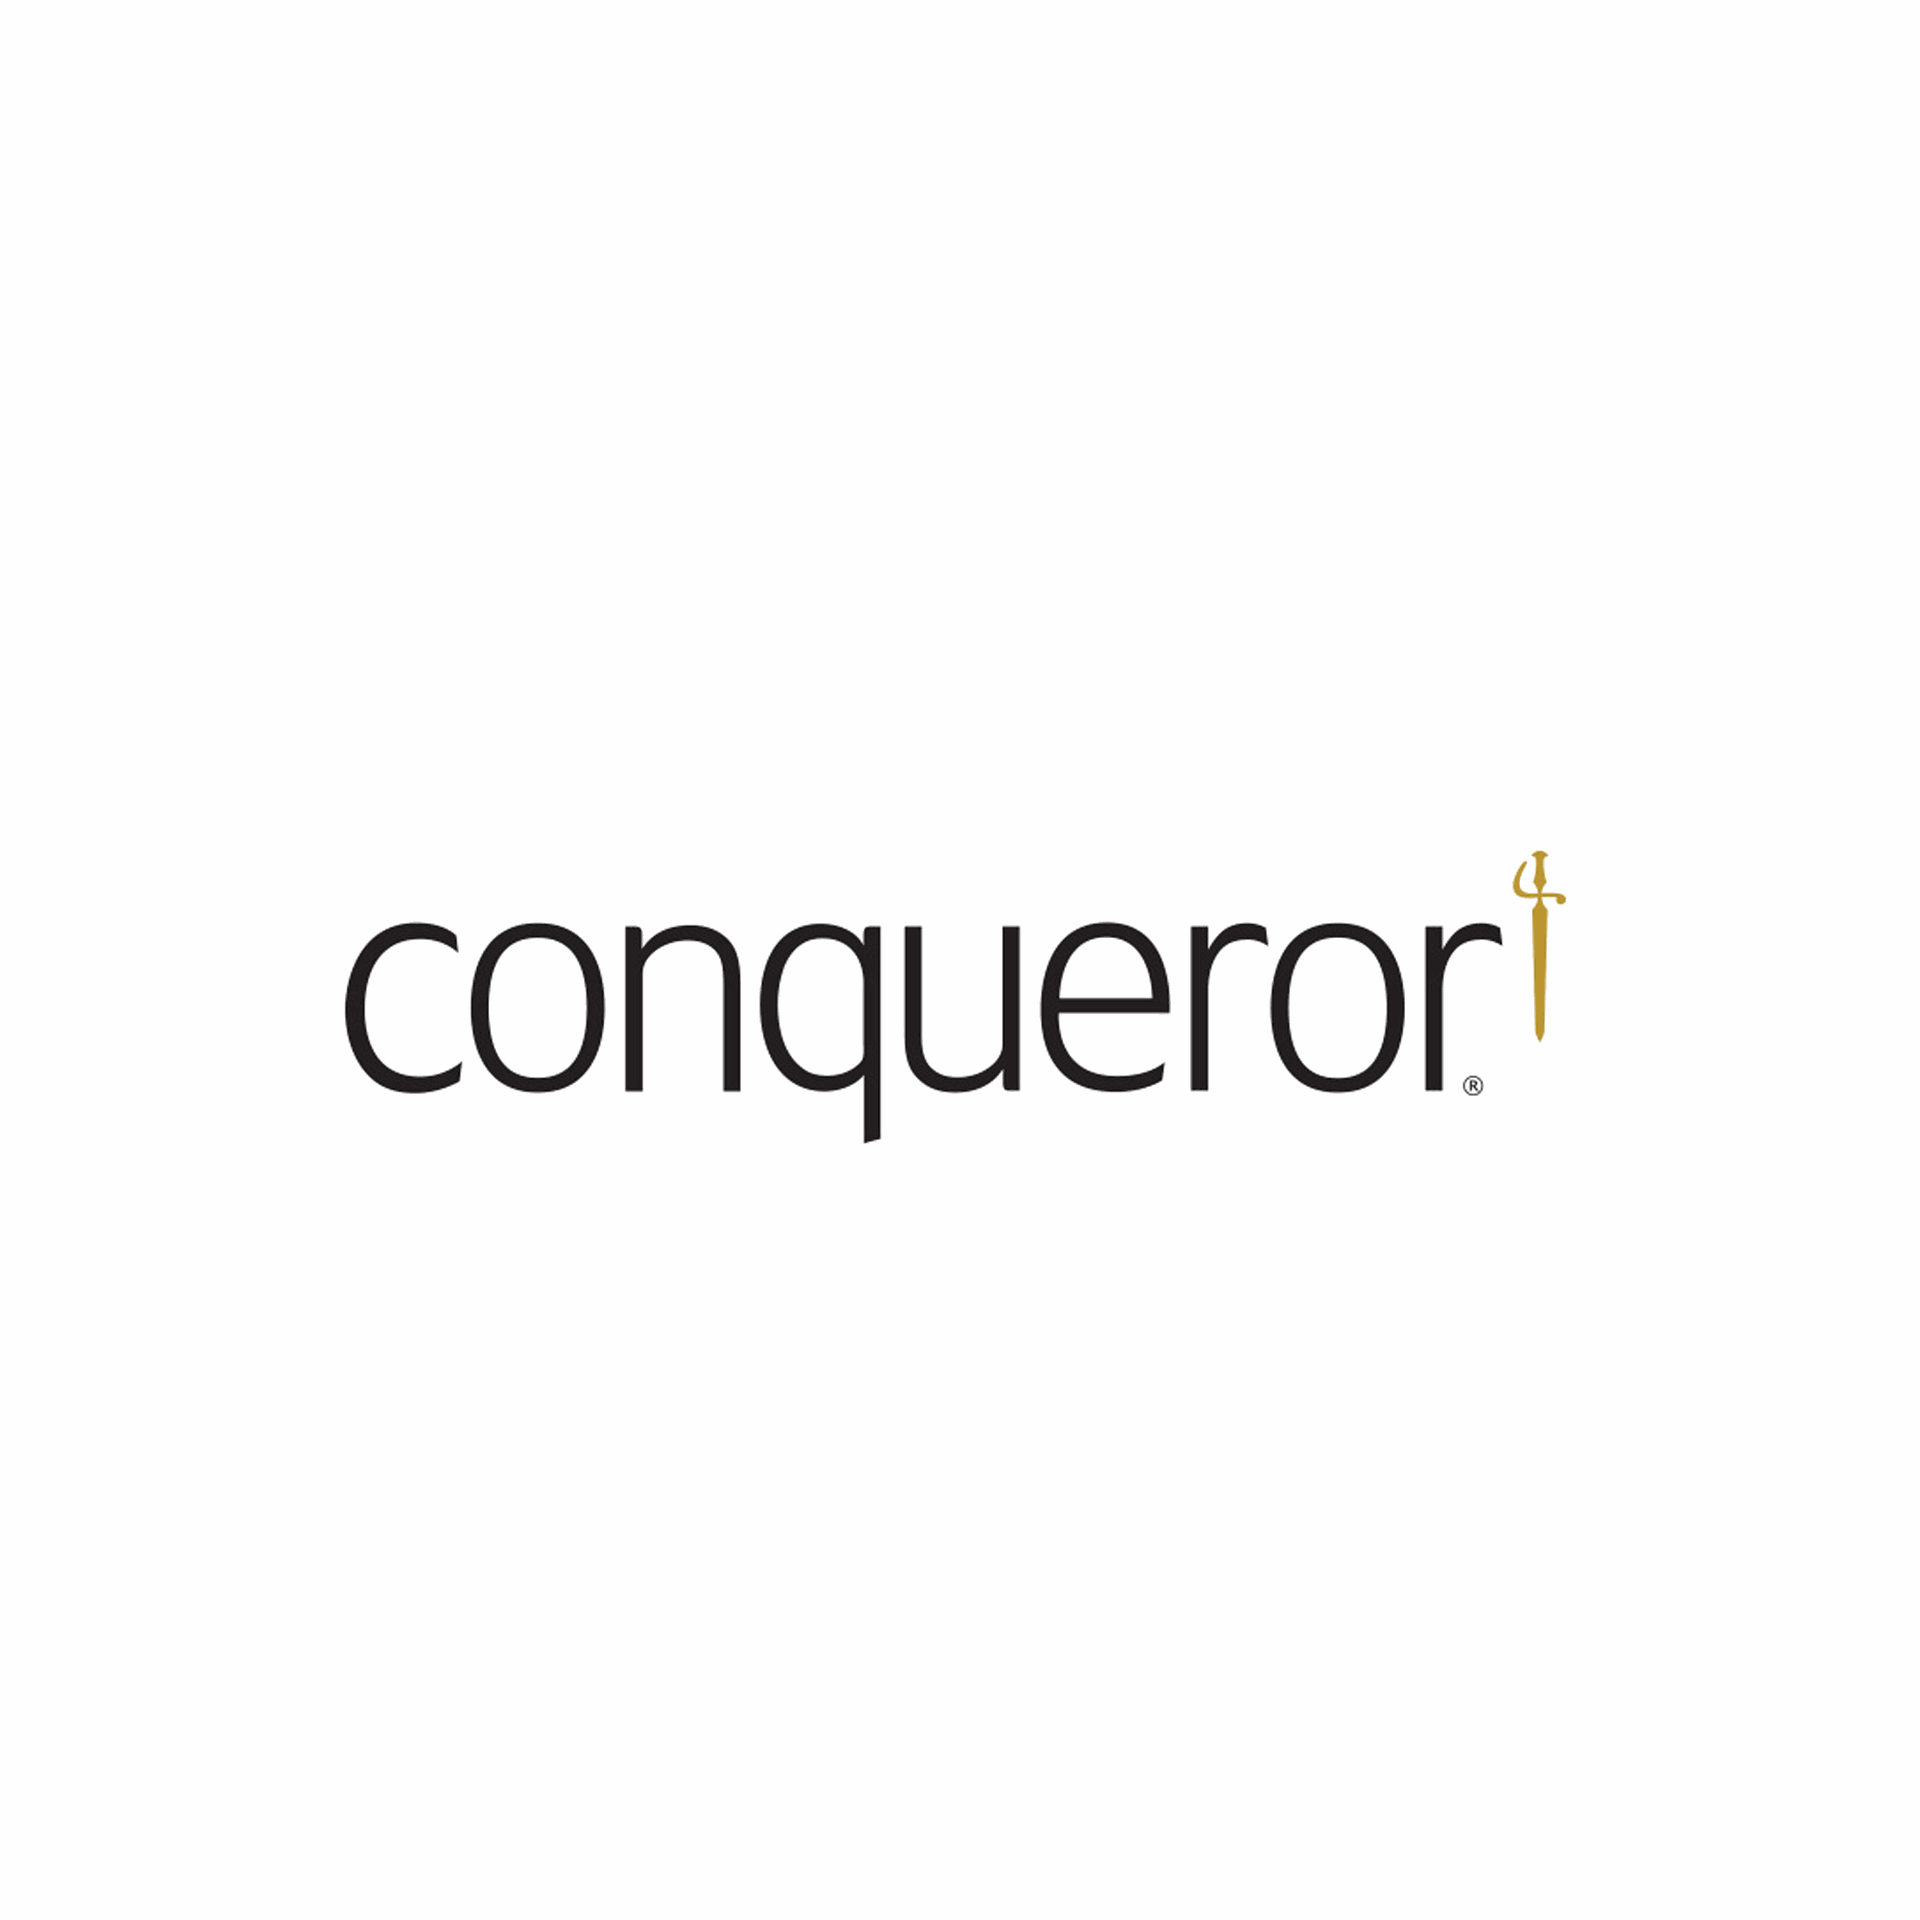 Brand: Conqueror